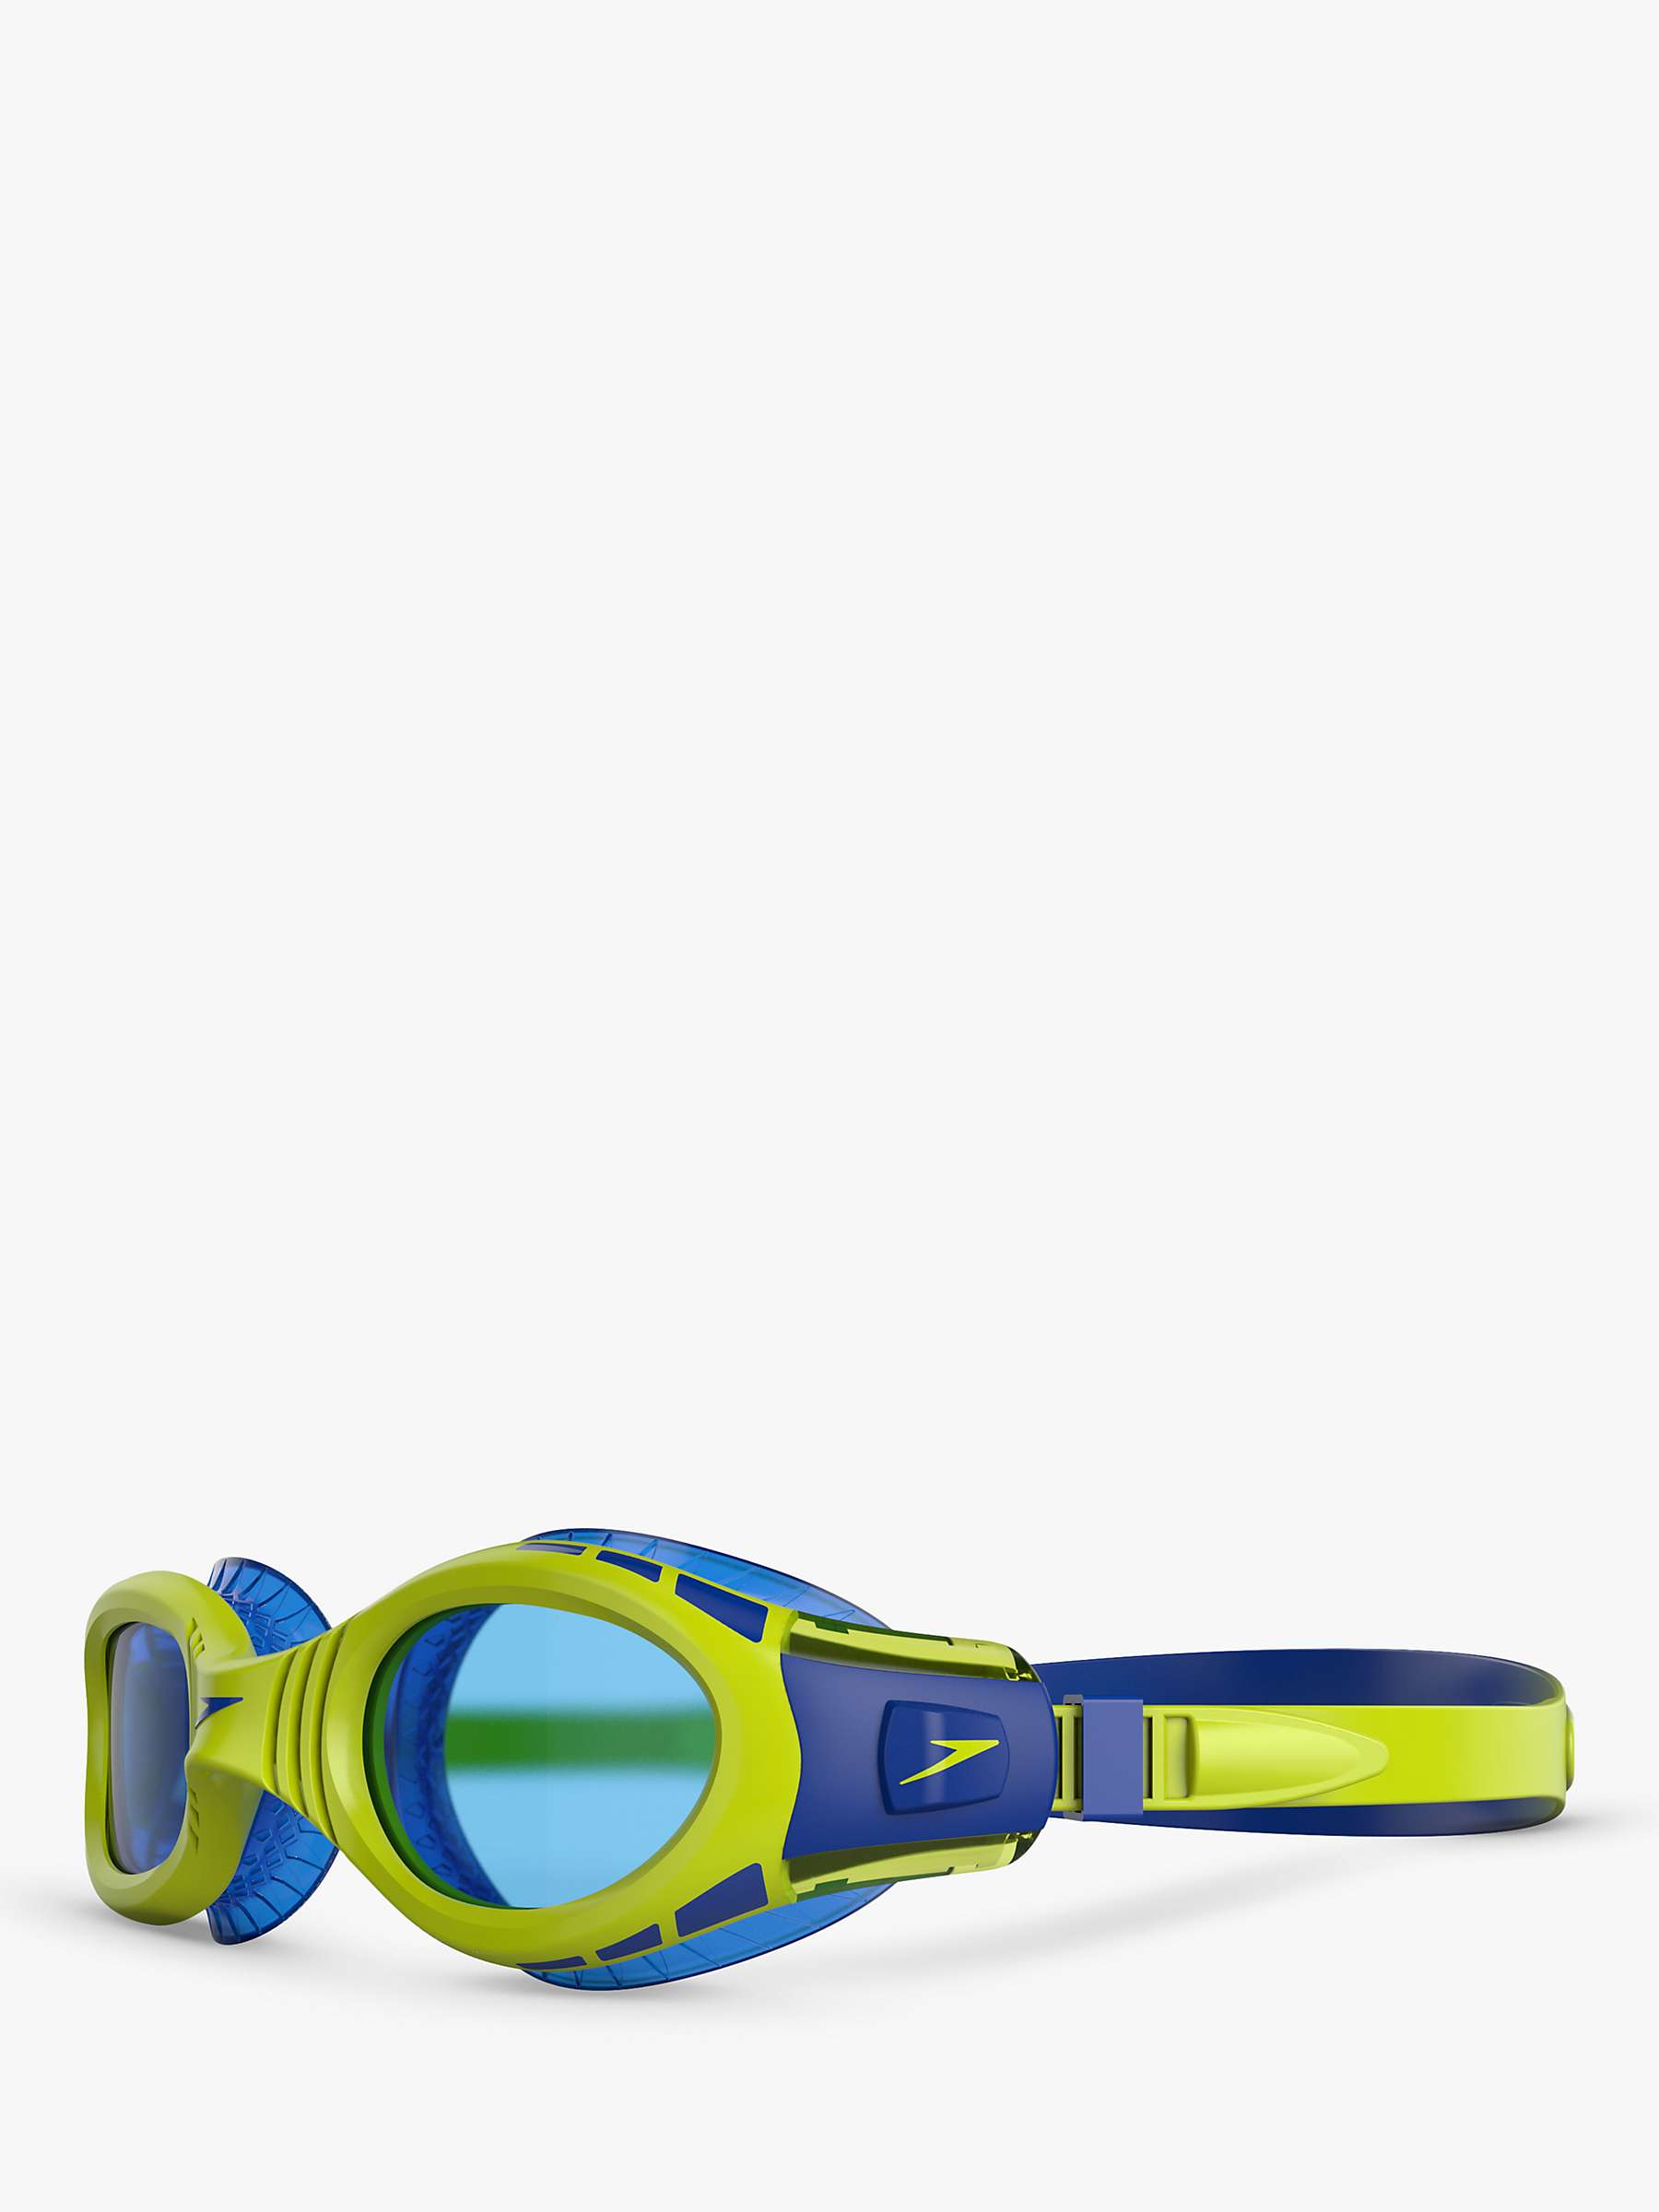 Buy Speedo Biofuse Flexiseal Swimming Goggles, Blue/Green Online at johnlewis.com